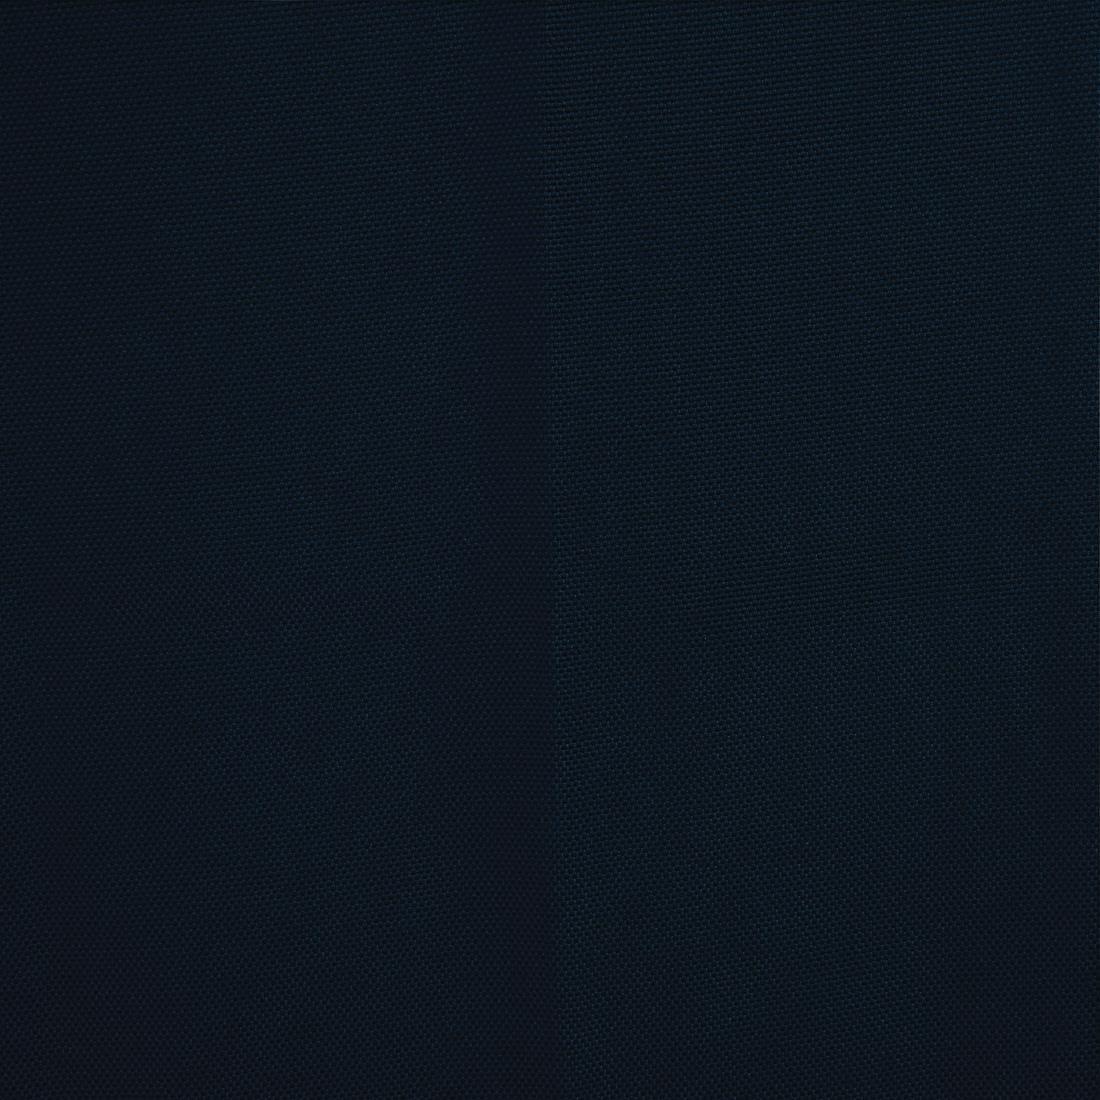 Bolero Dark Blue Canvas Barrier - DL480  - 6